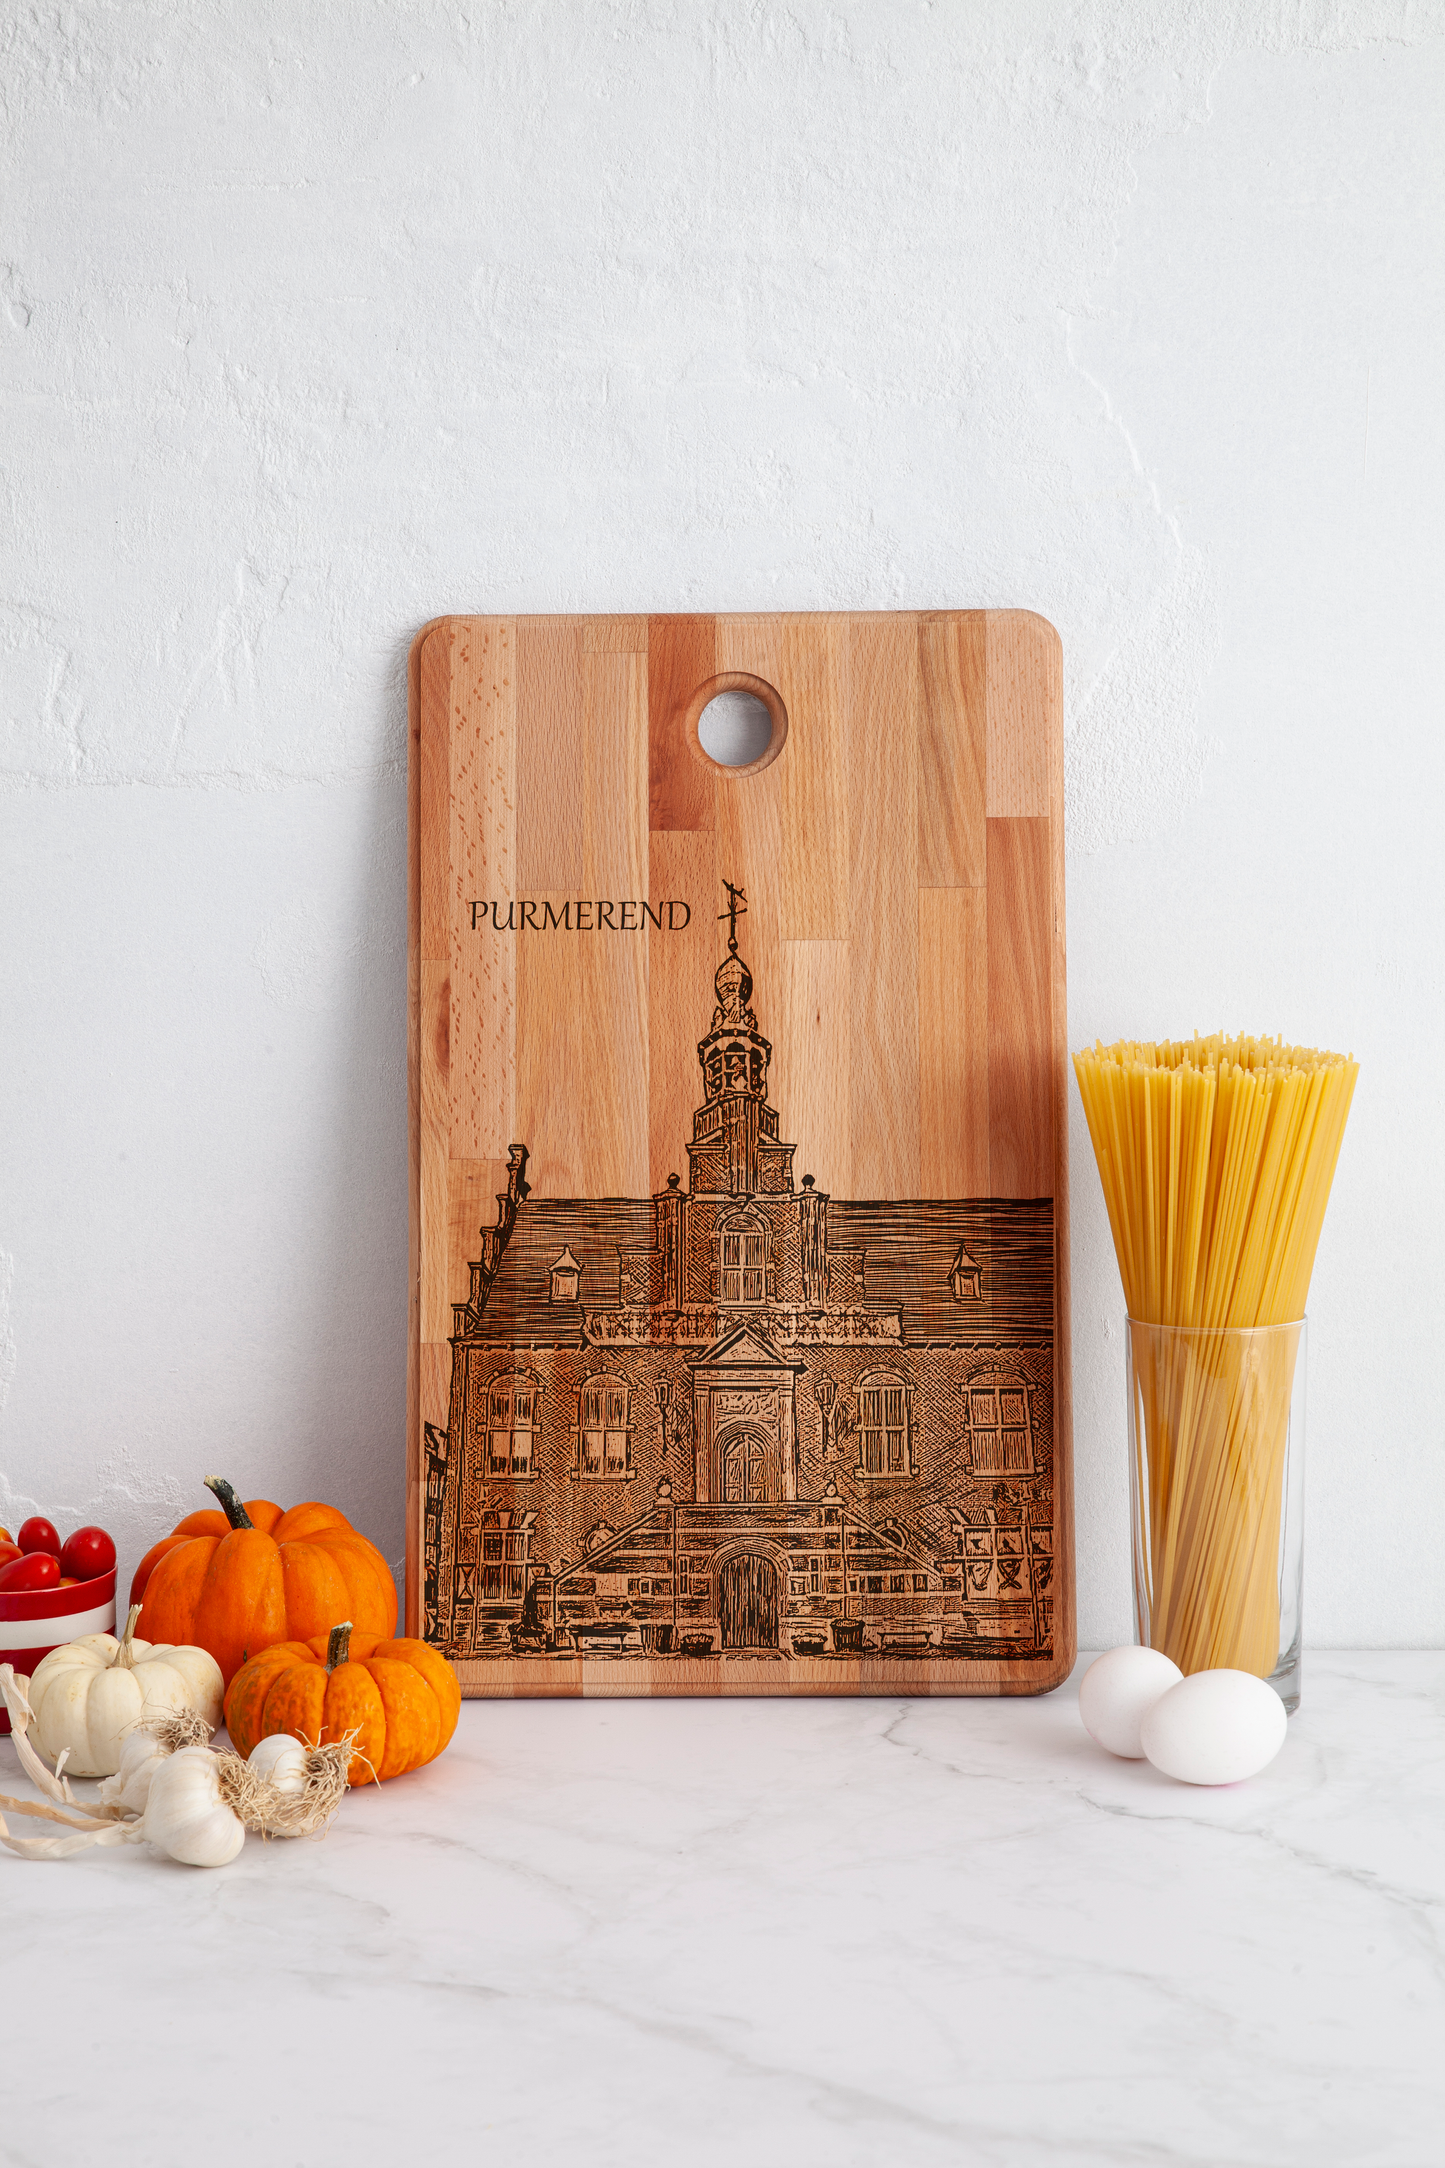 Purmerend, Stadhuis, cutting board, in kitchen